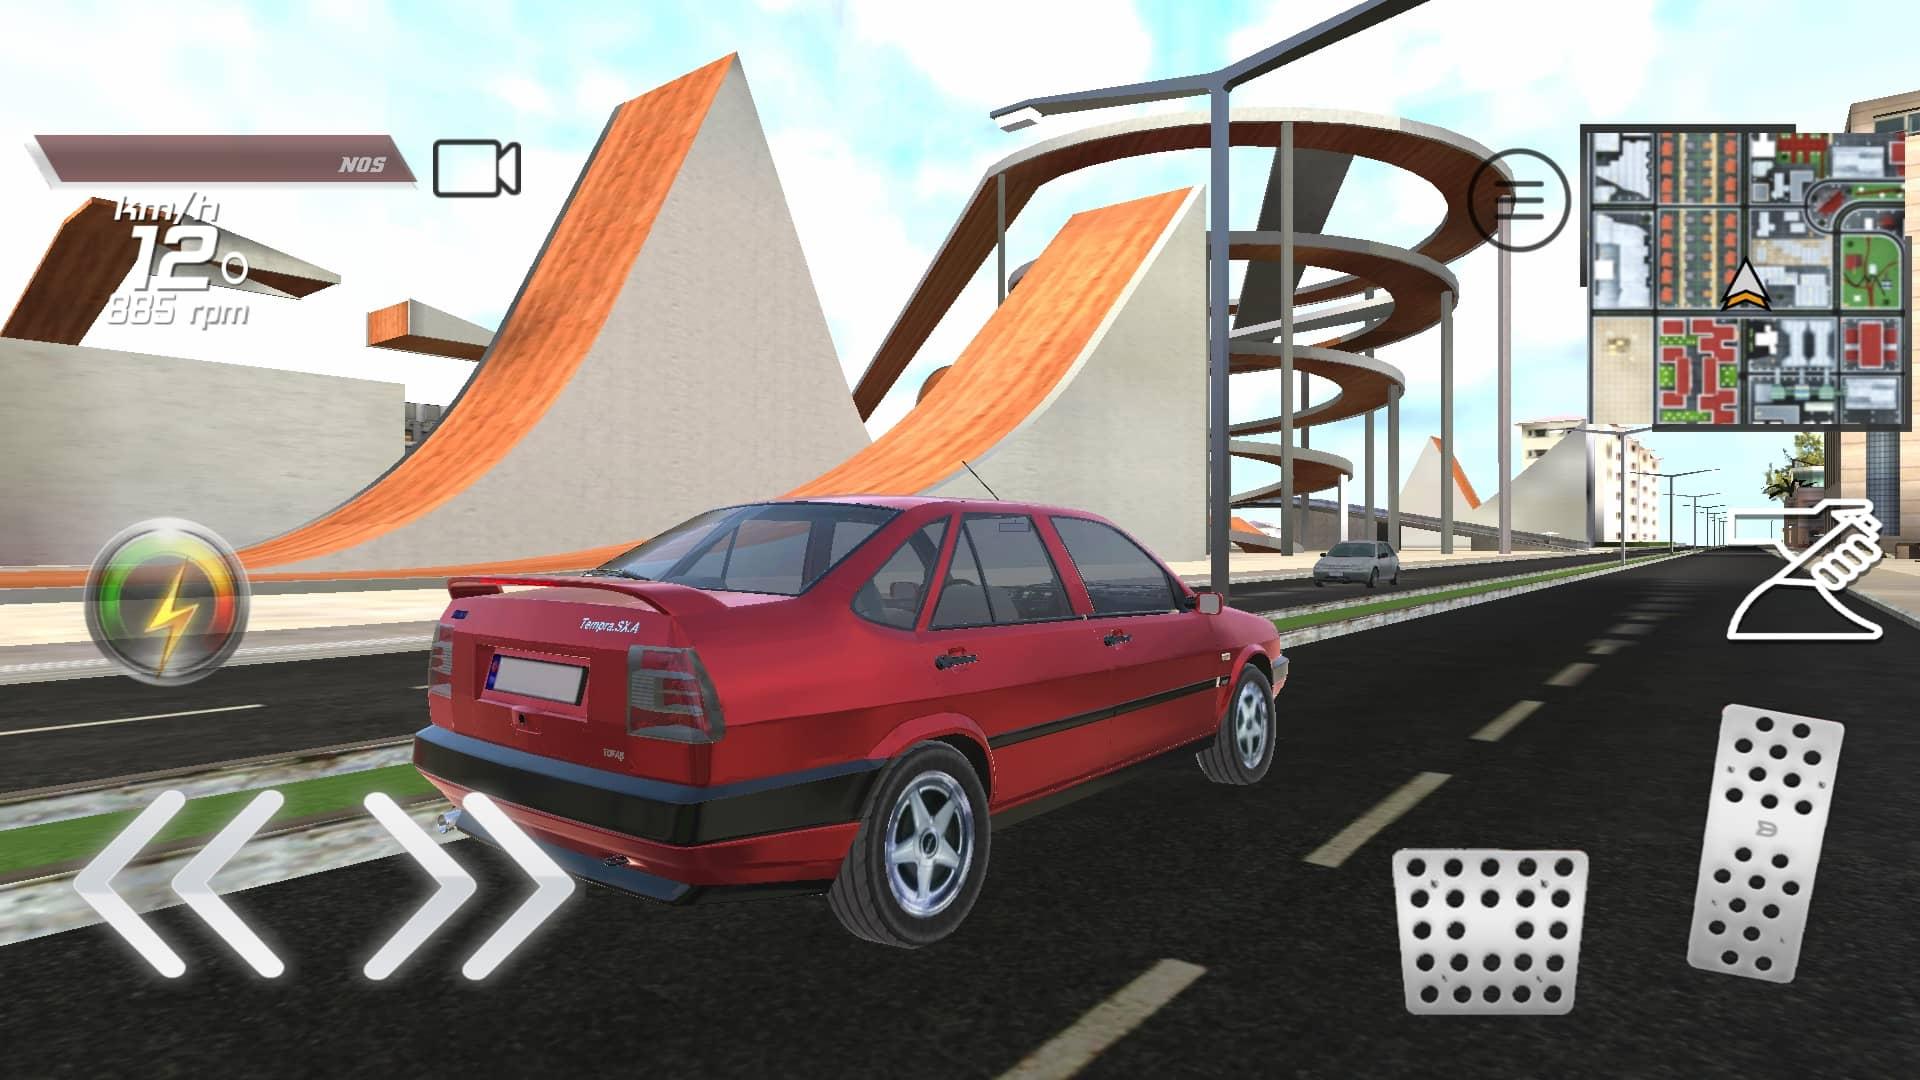 Tempra - City Simulation, Quests and Parking 1.7 Screenshot 6